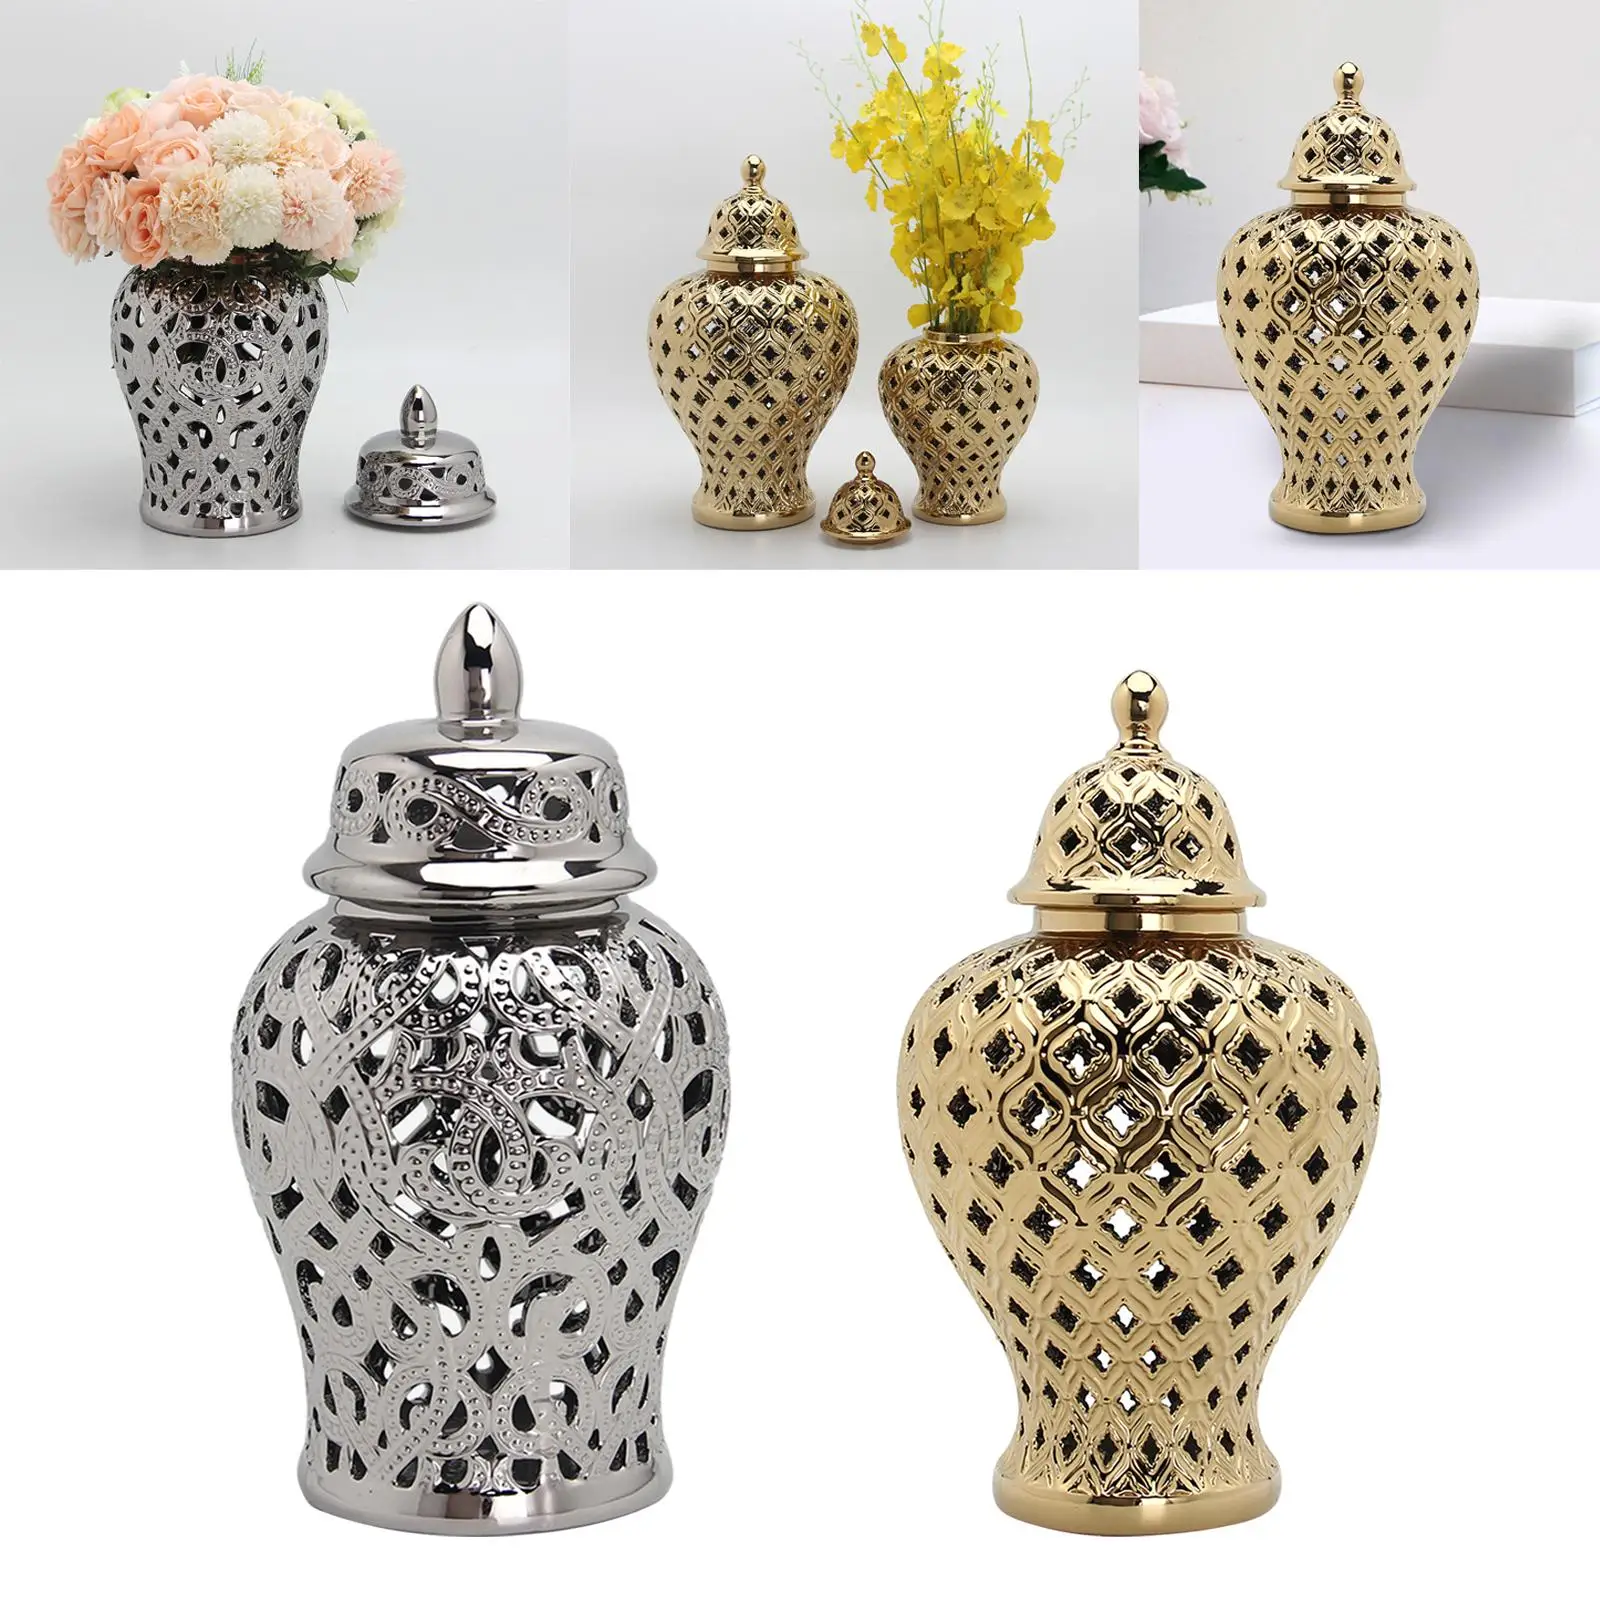 Light Luxury Ceramic Ginger Jar Storage Decor Accessories Ornaments Handicraft for Desktop Gift Home Living Room Decoration